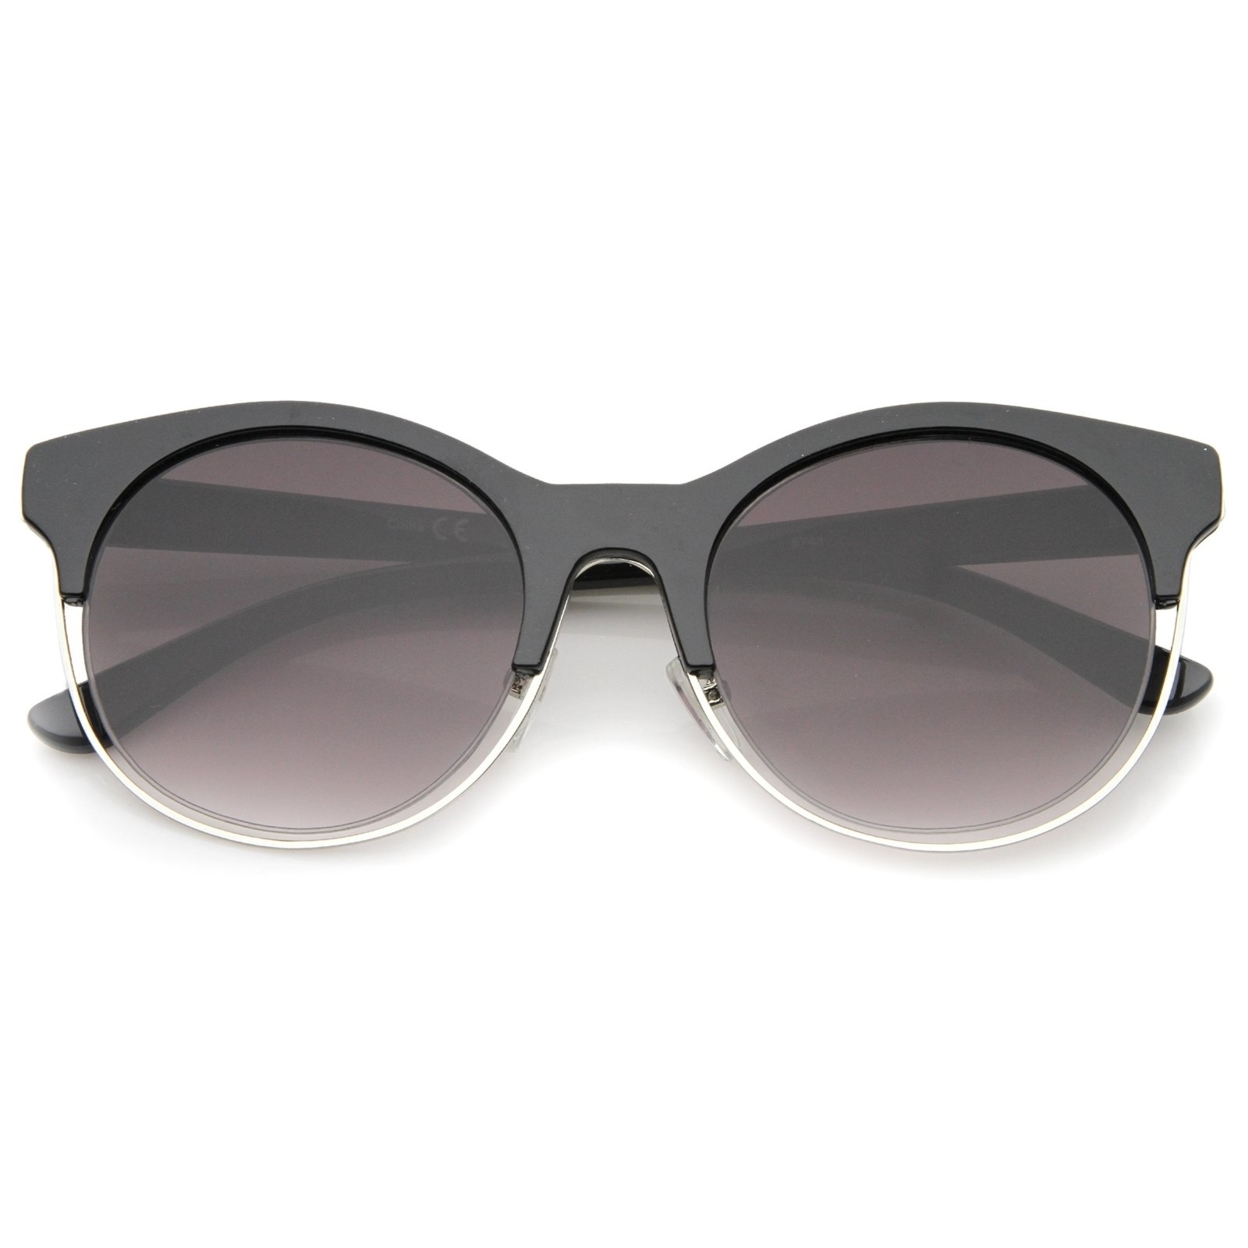 Modern Half Frame Metal Trim Round Cat Eye Sunglasses 53mm - Shiny Black-Gold / Smoke